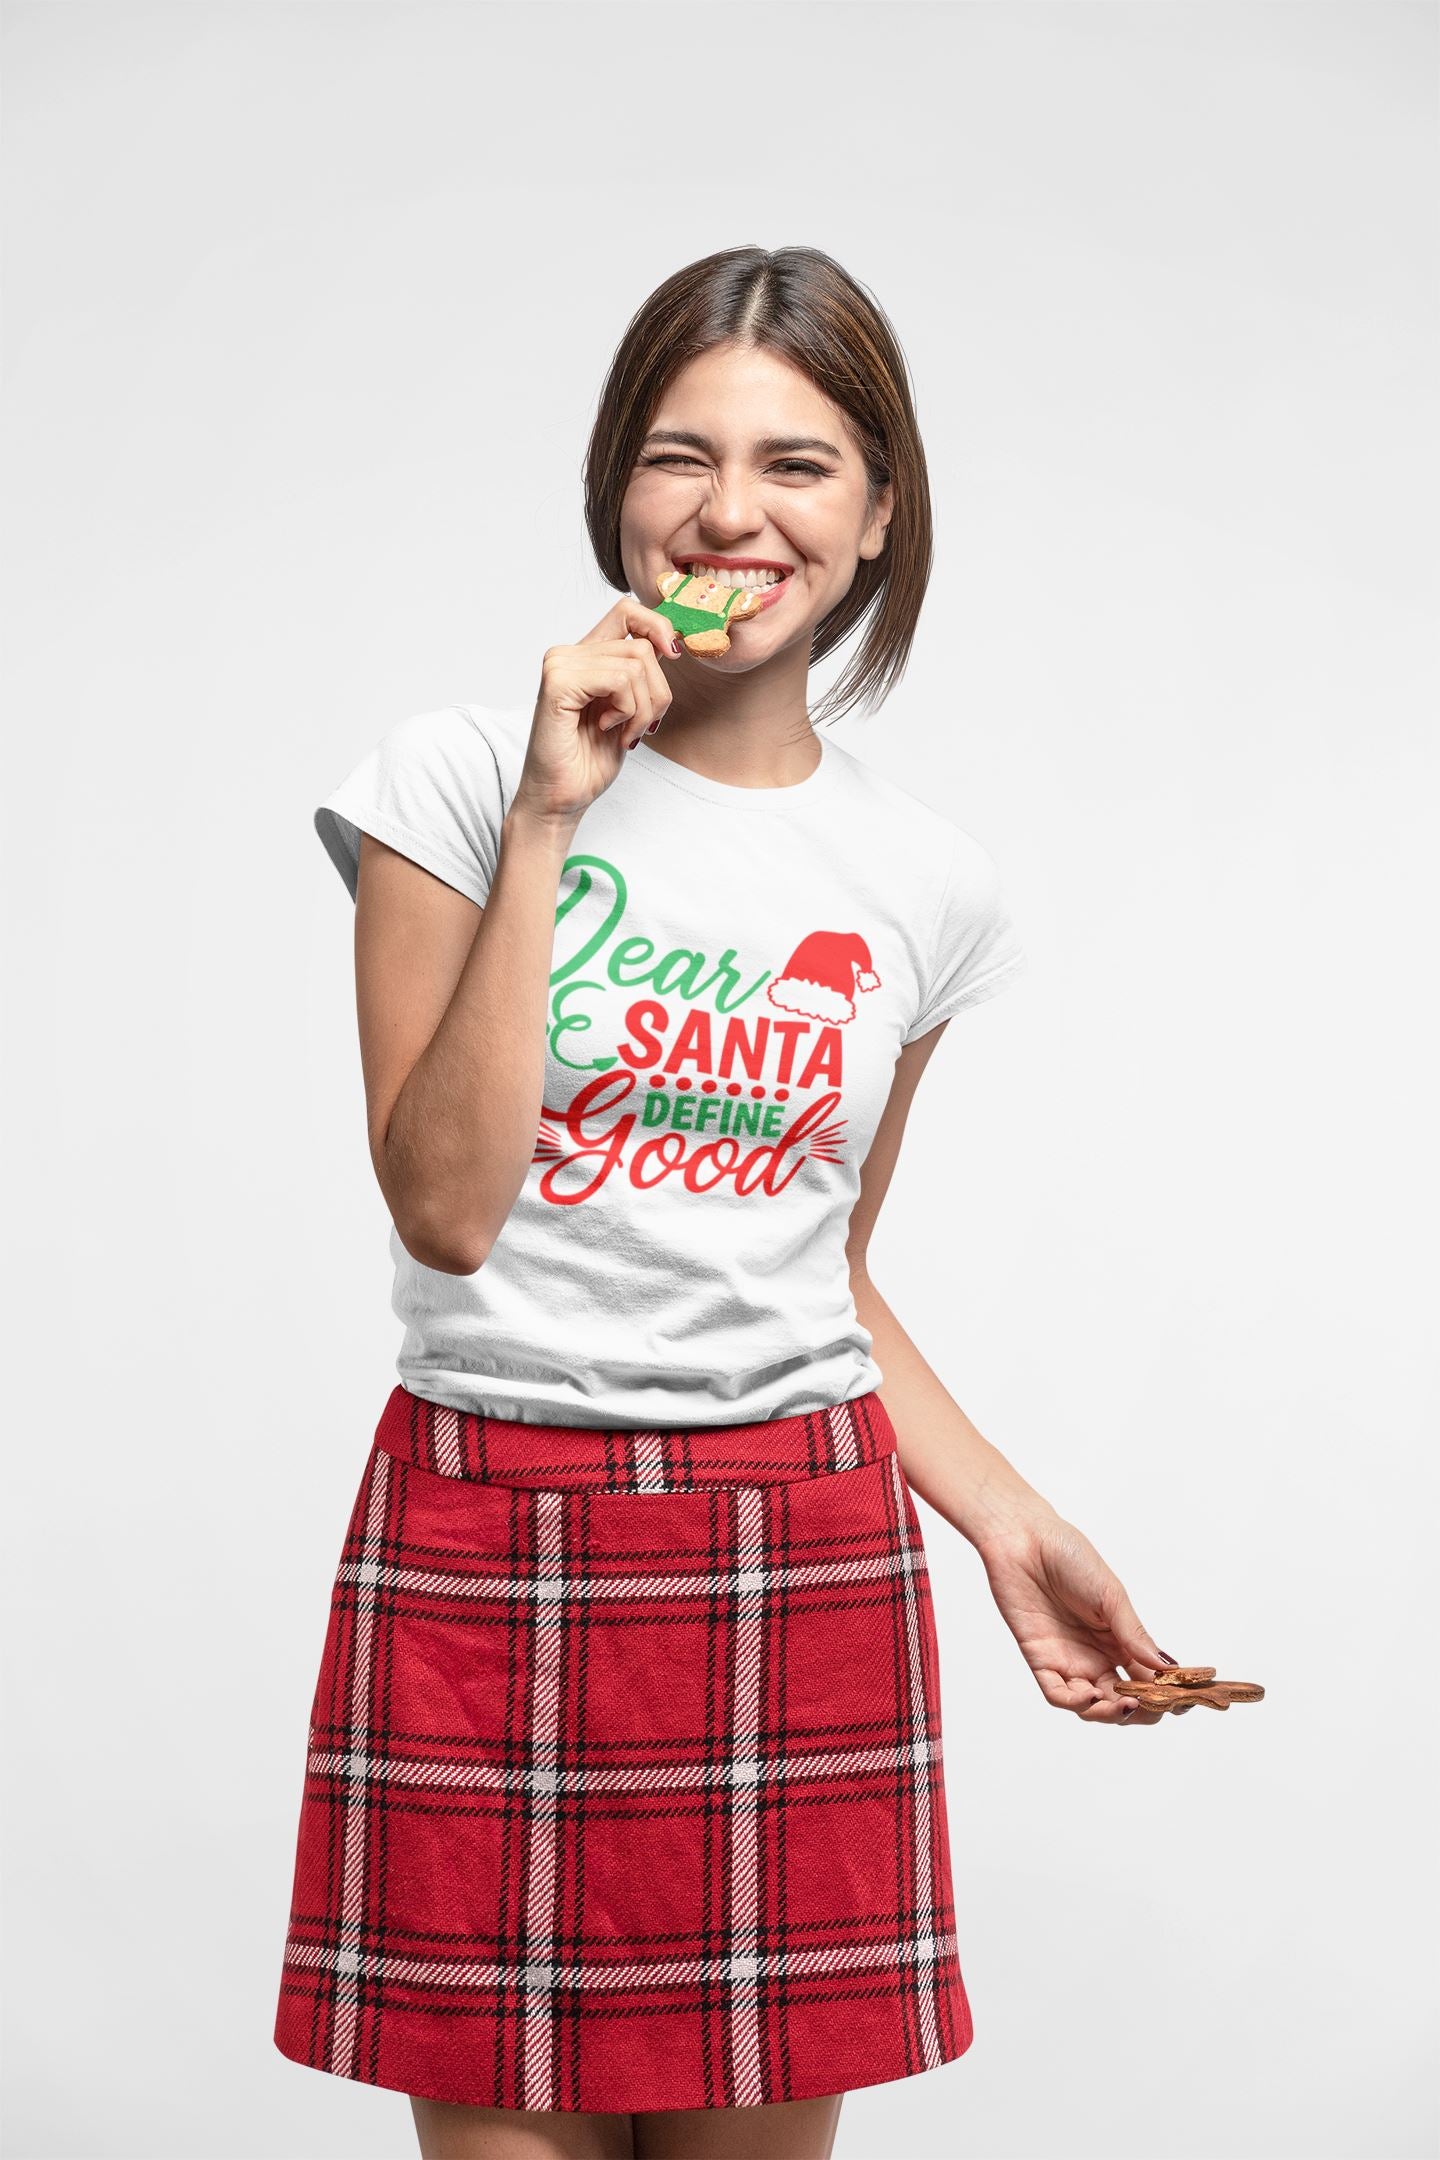 Dear Santa Define Good Funny Family T-shirts